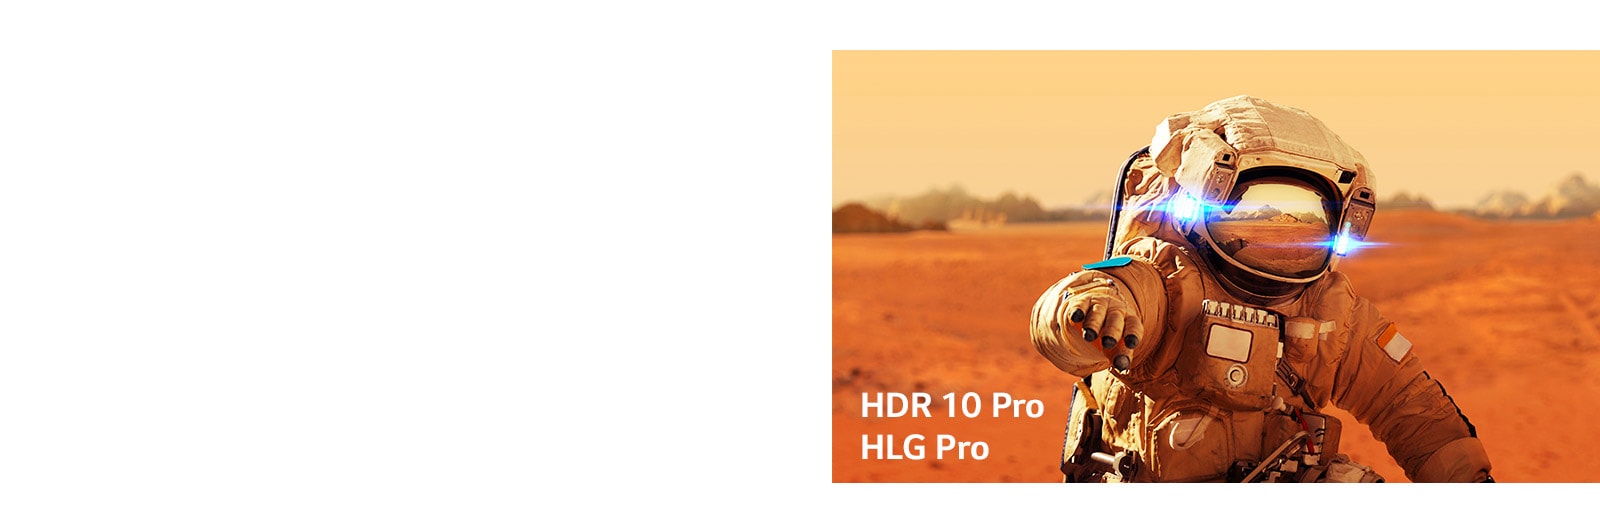 Marvel Iron Man, naslovne karte z logotipi HLG Pro in HDR 10 Pro